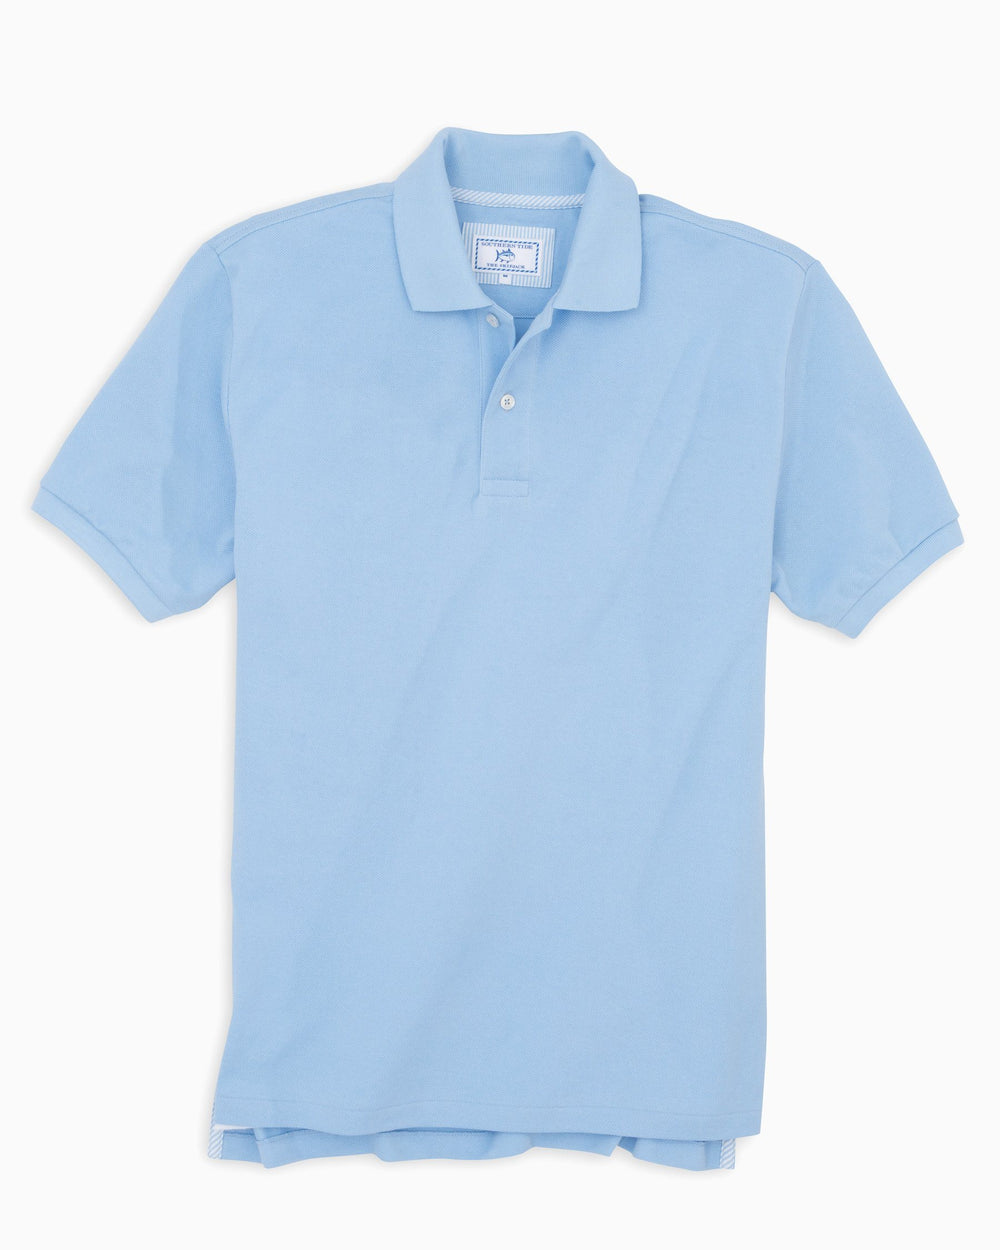 Skipjack Gameday Colors Polo Shirt